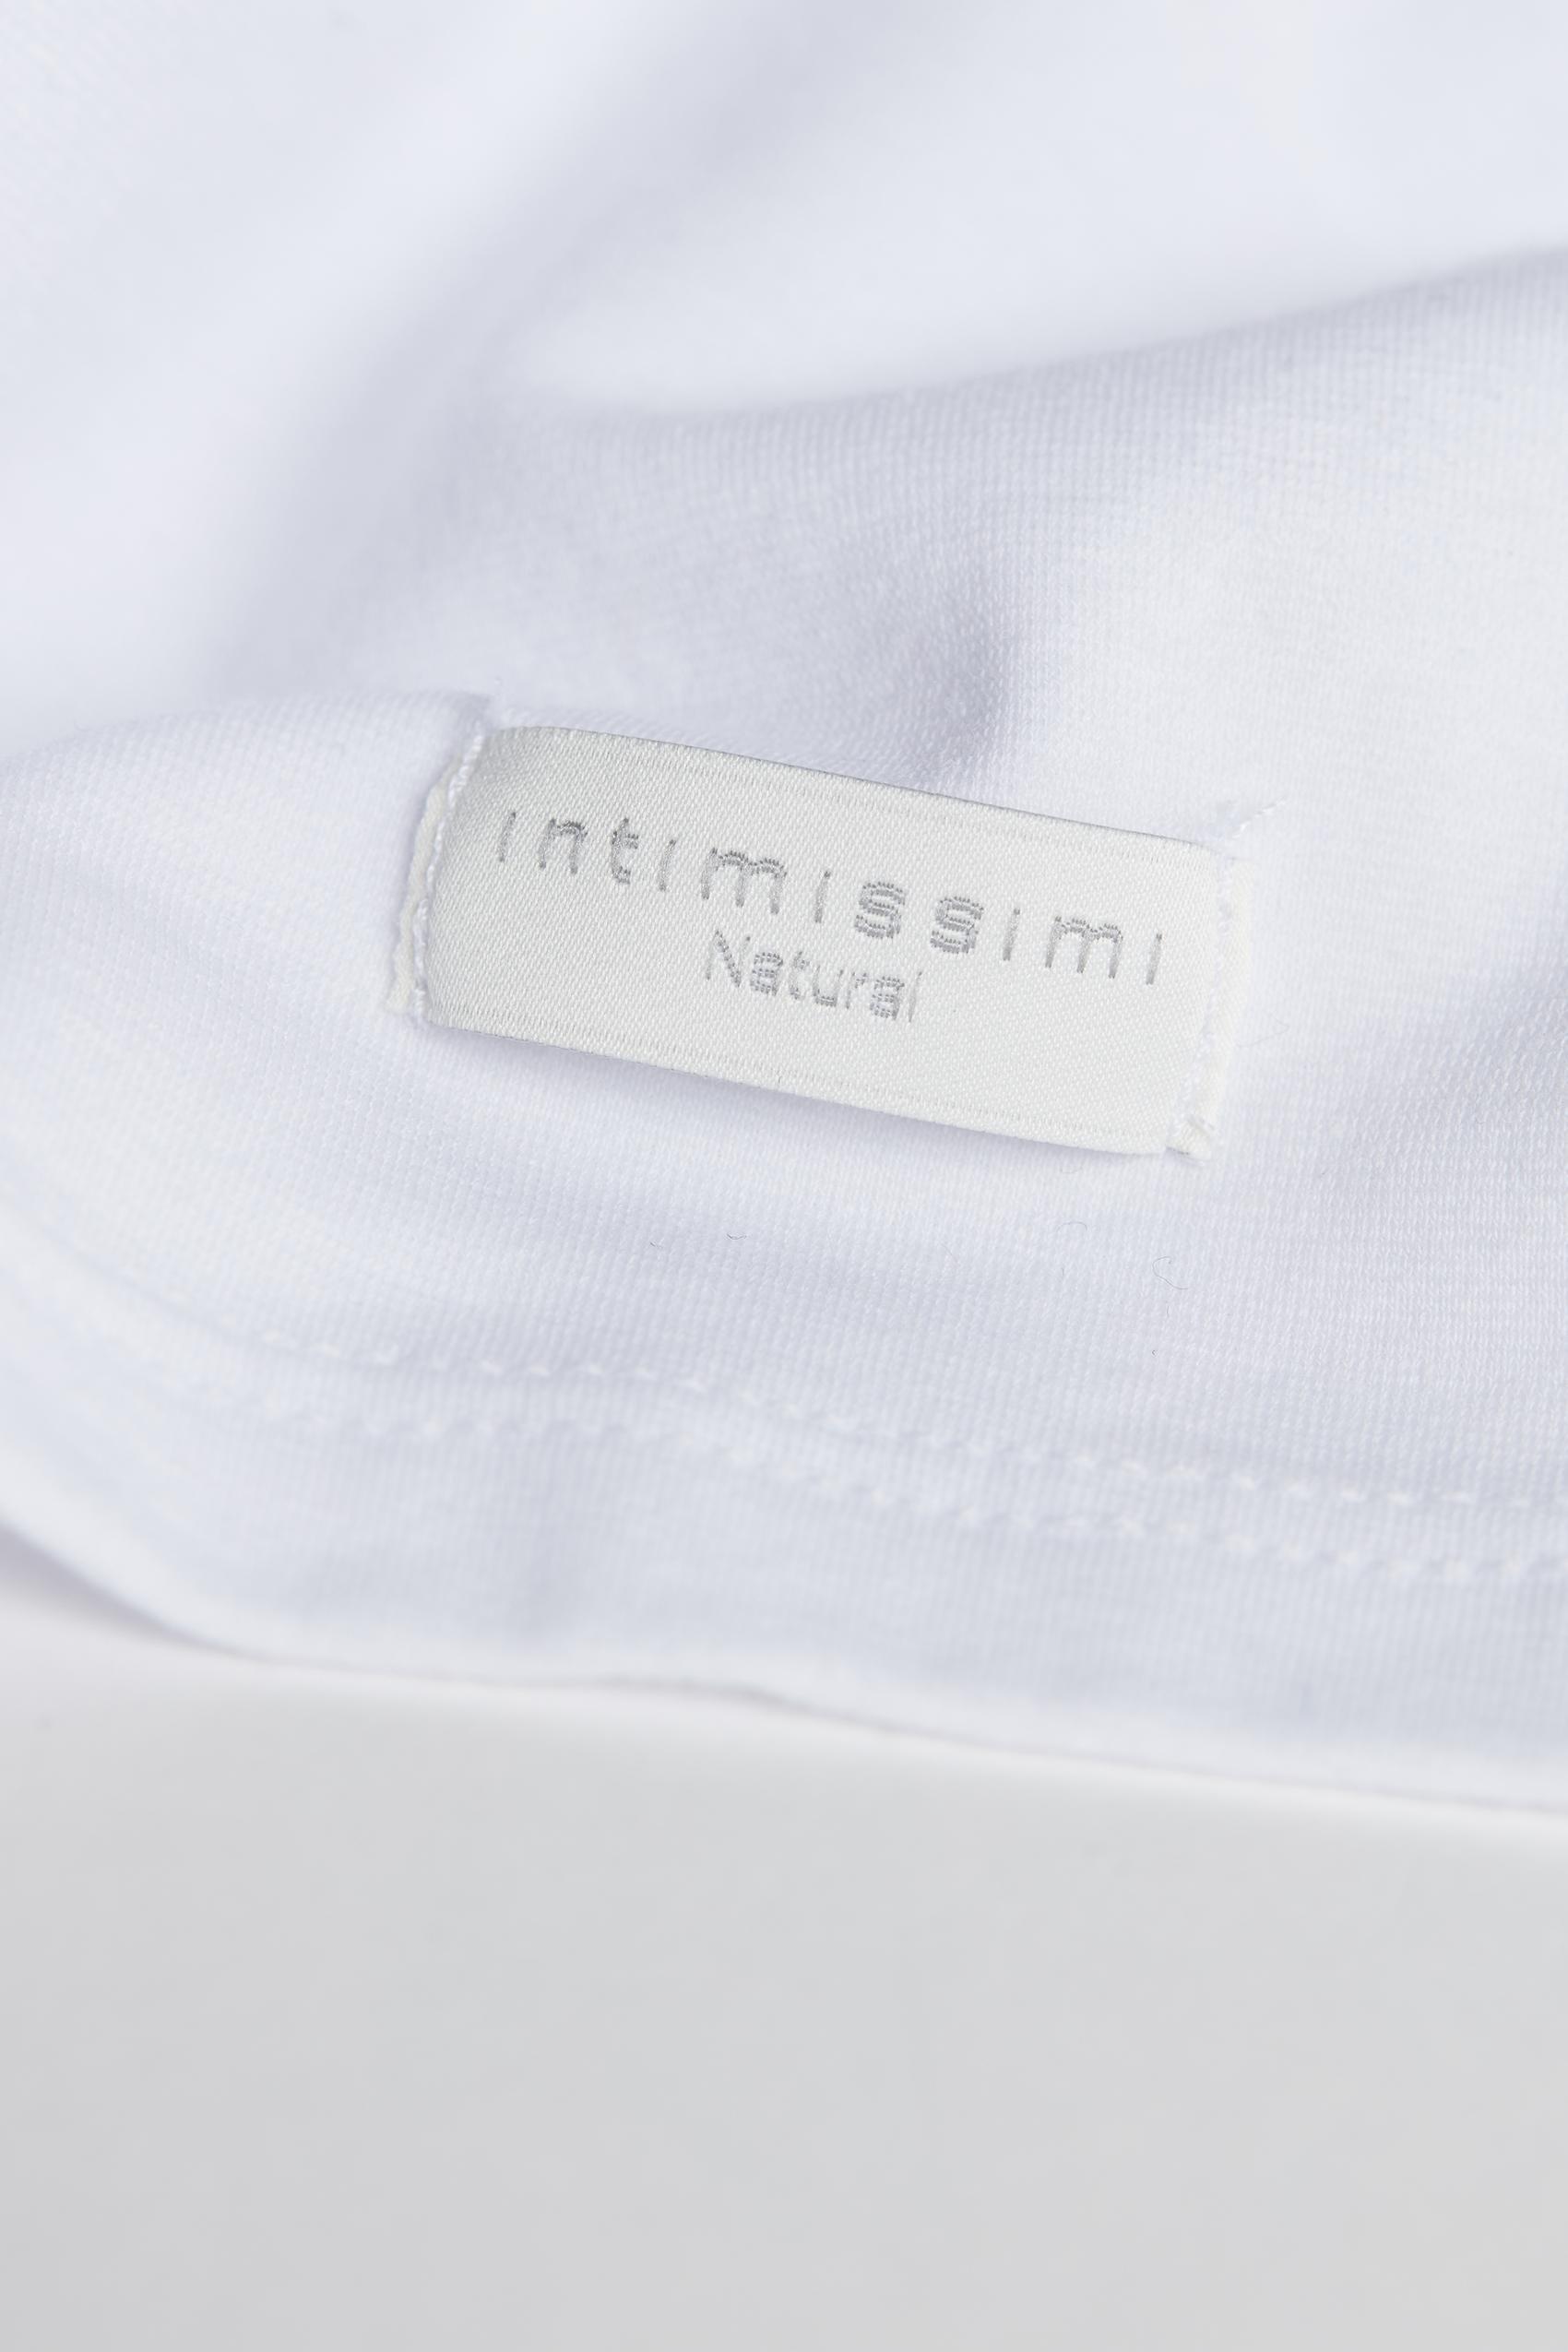 Intimissimi - صدرية قطنية بيضاء بحمالات عريضة ، للنساء